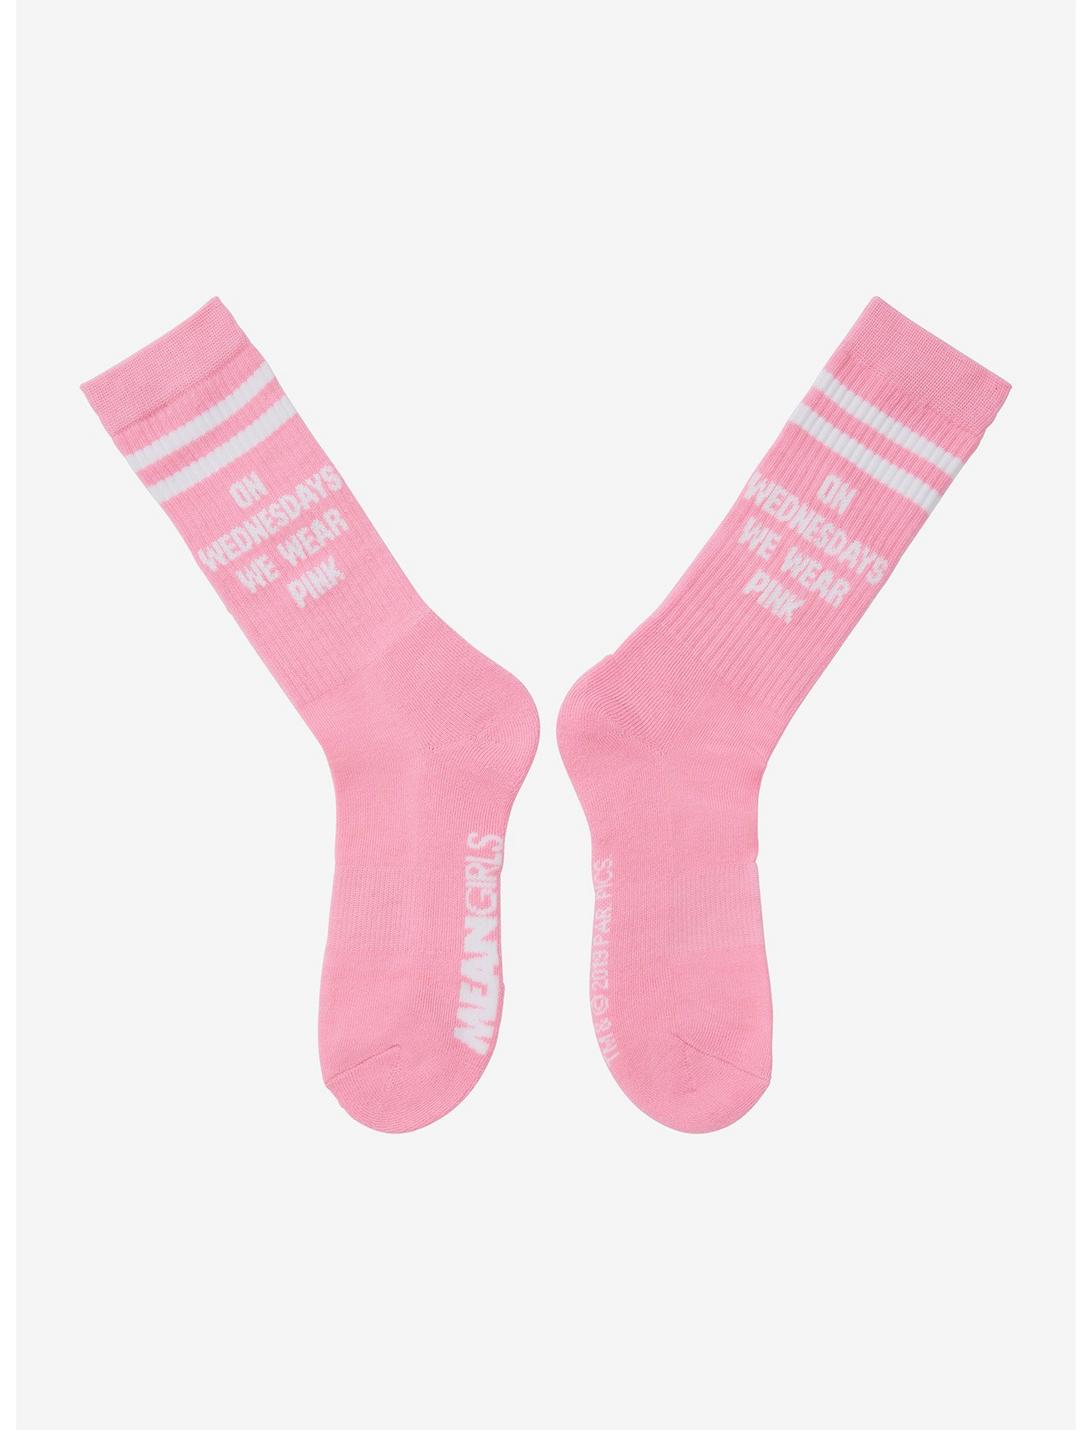 Mean Girls Wednesdays Pink Crew Socks, , hi-res